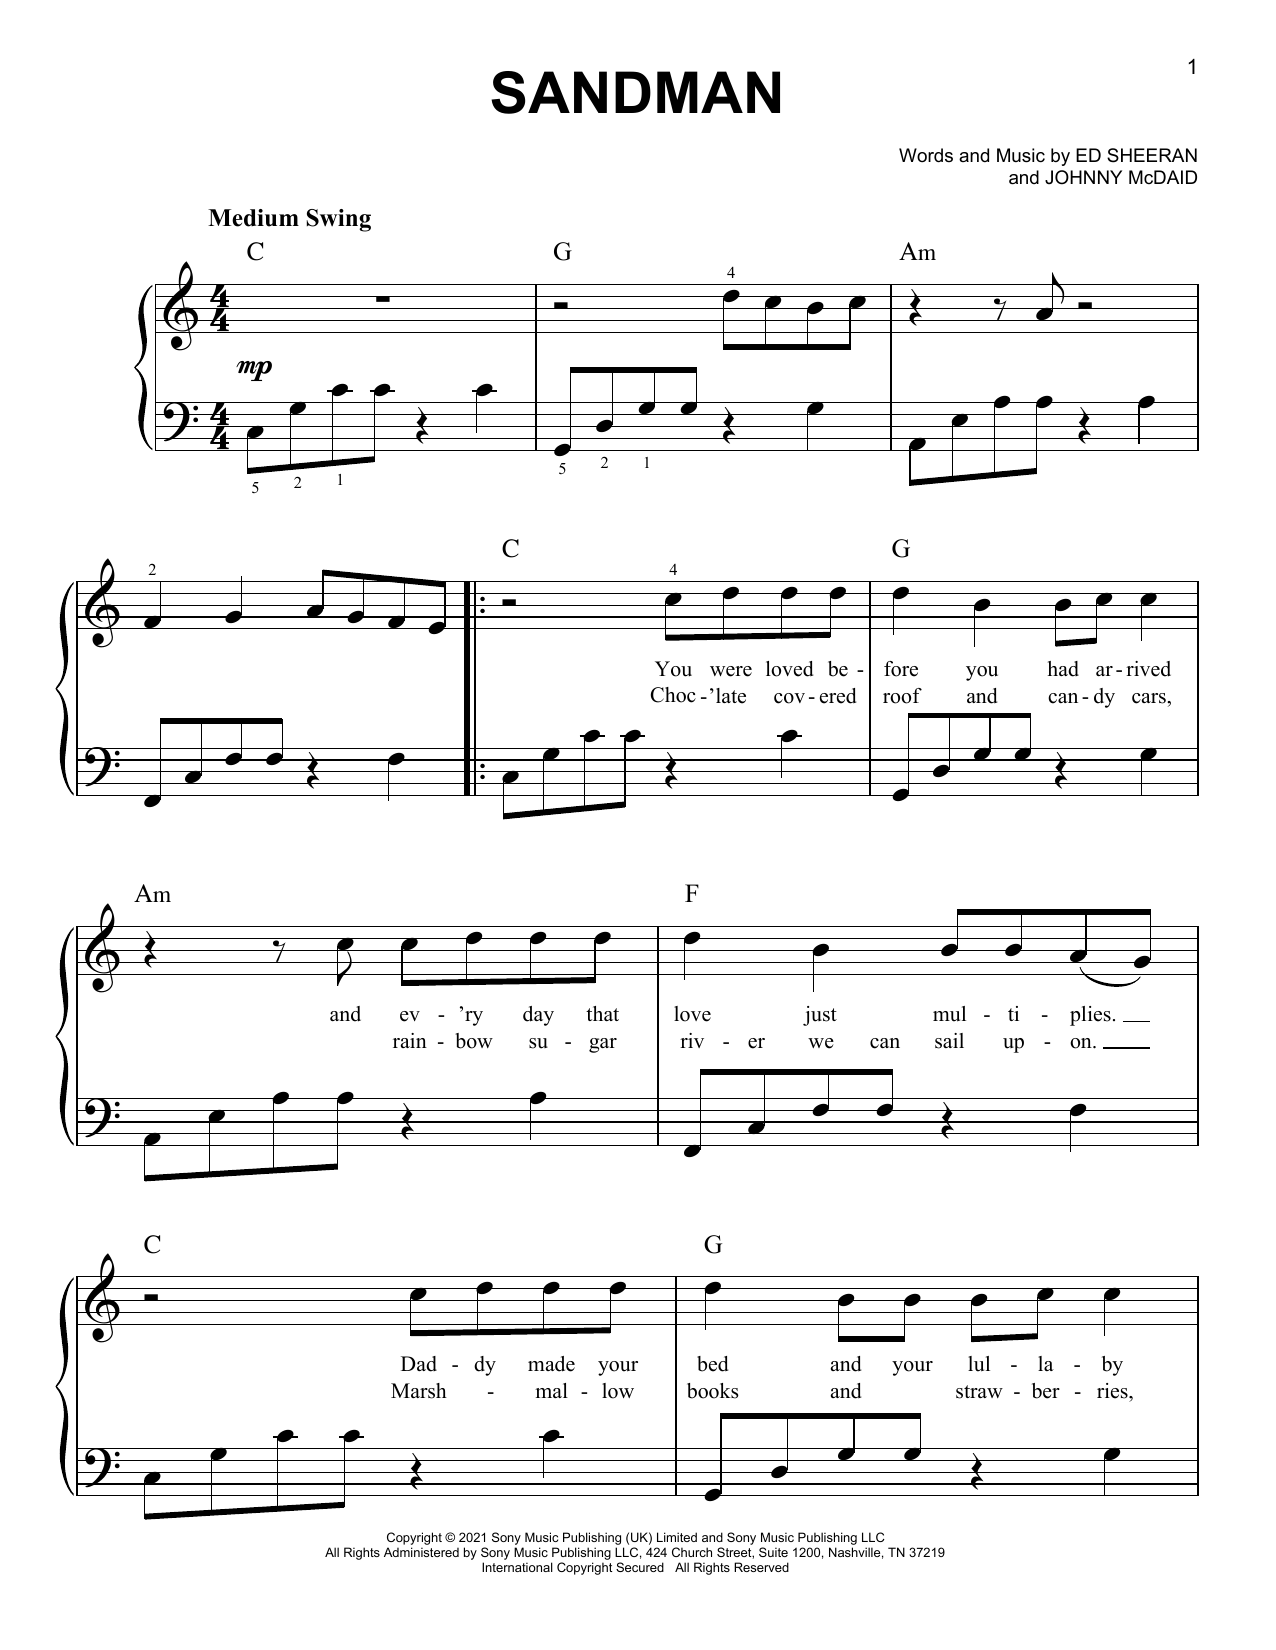 Ed Sheeran Sandman Sheet Music Notes & Chords for Easy Piano - Download or Print PDF